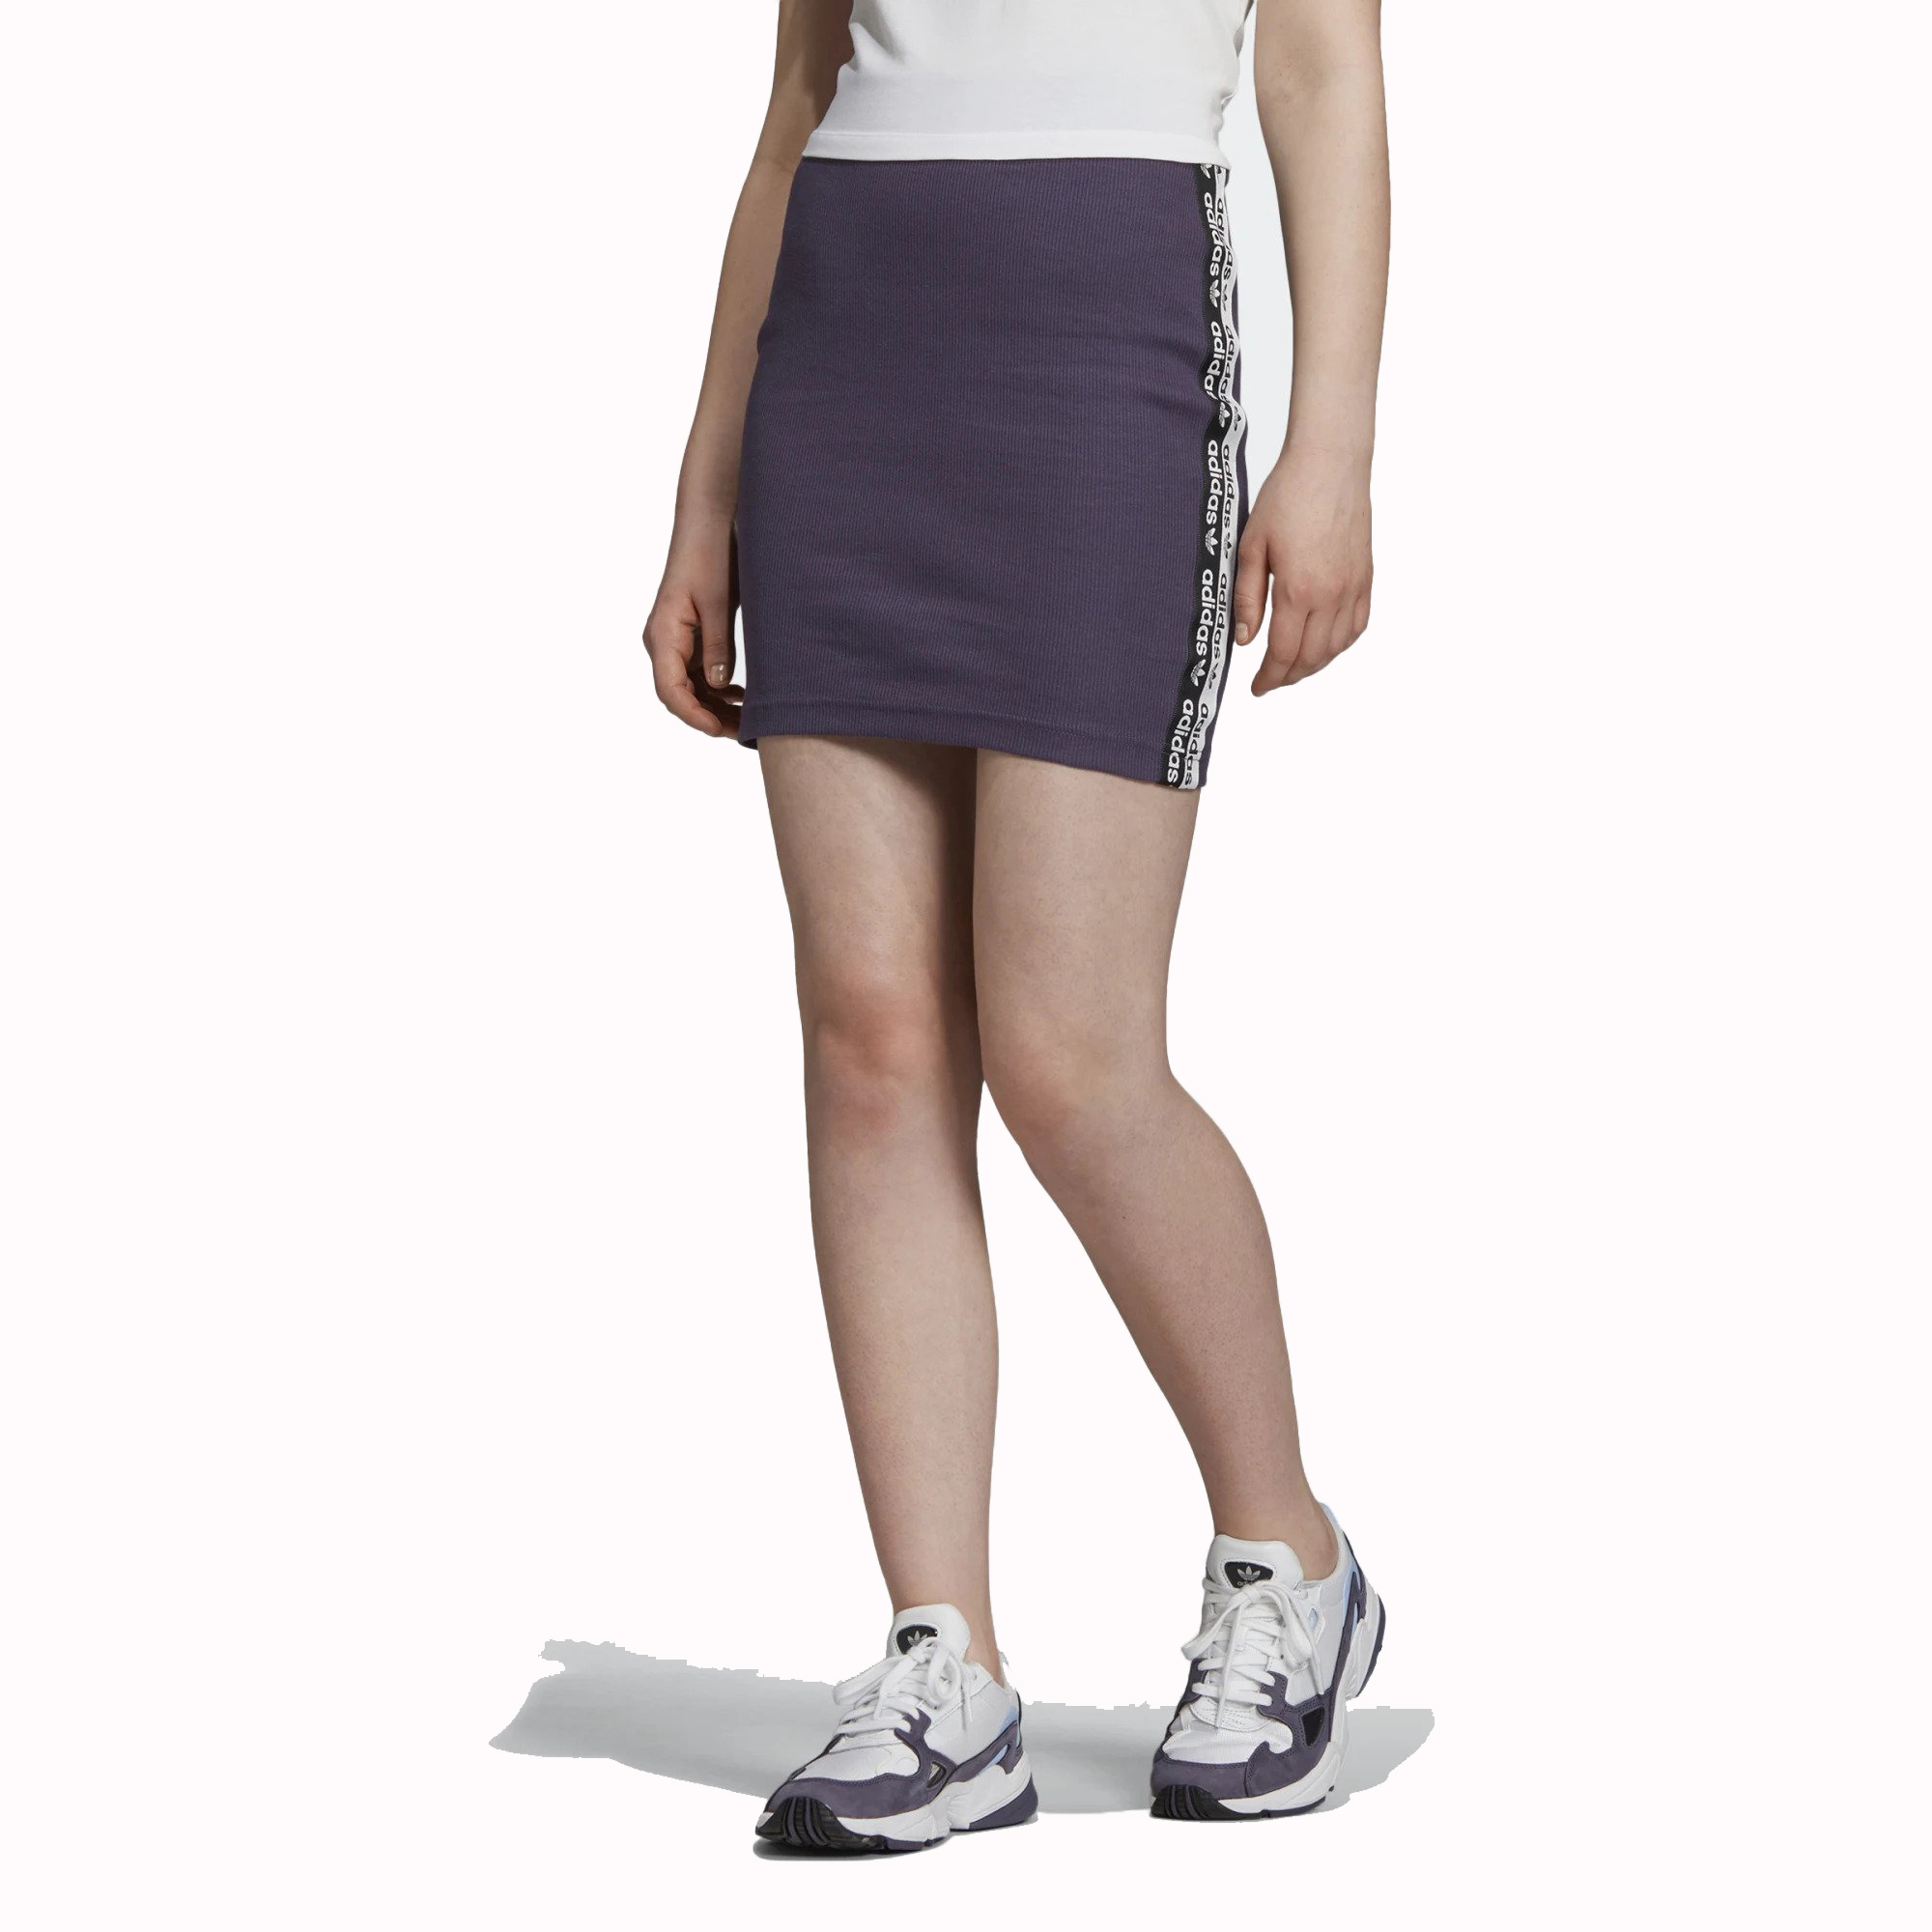 purple adidas skirt